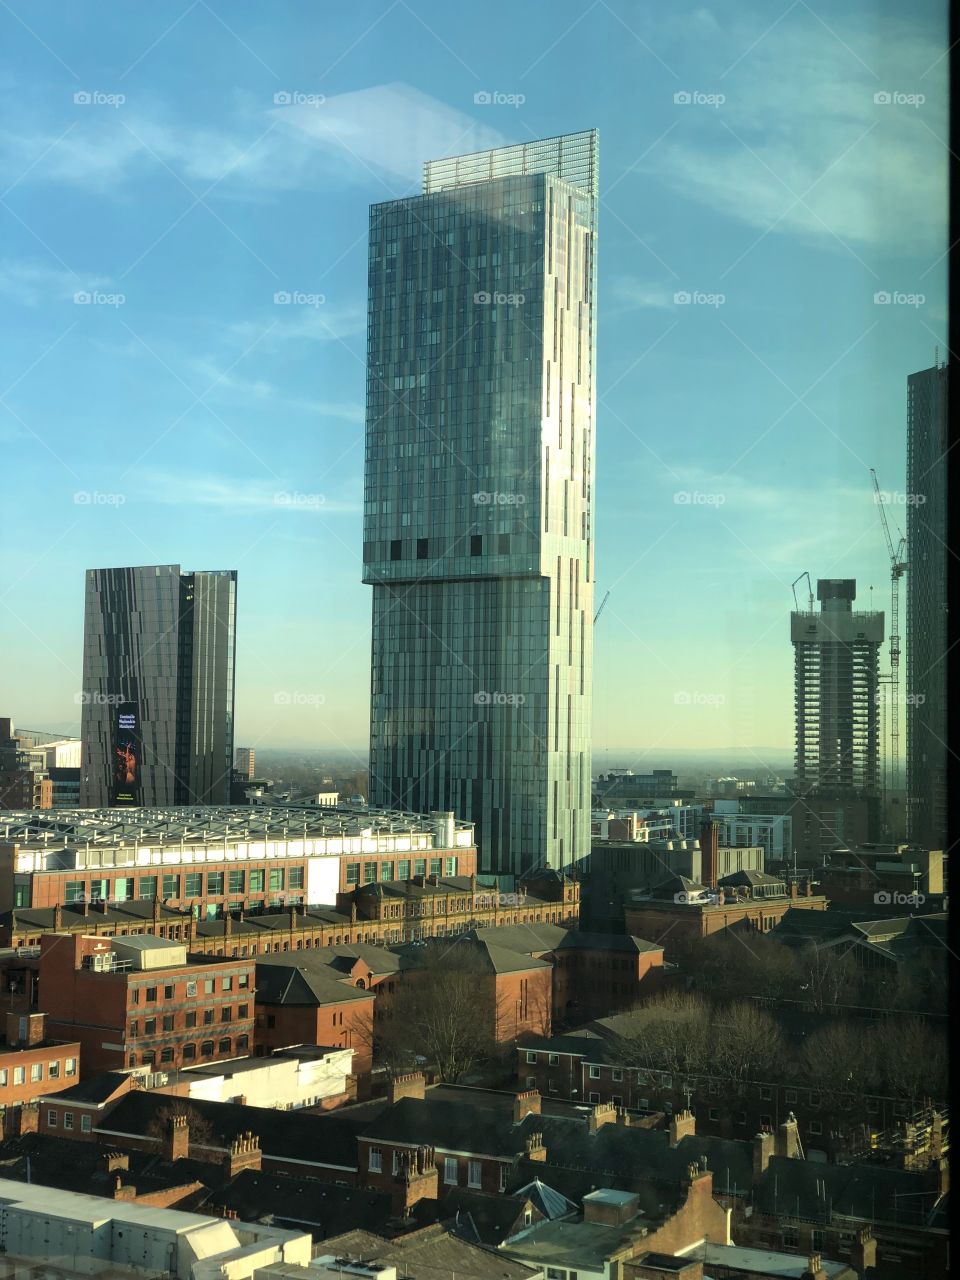 Beetham Tower - February 2019